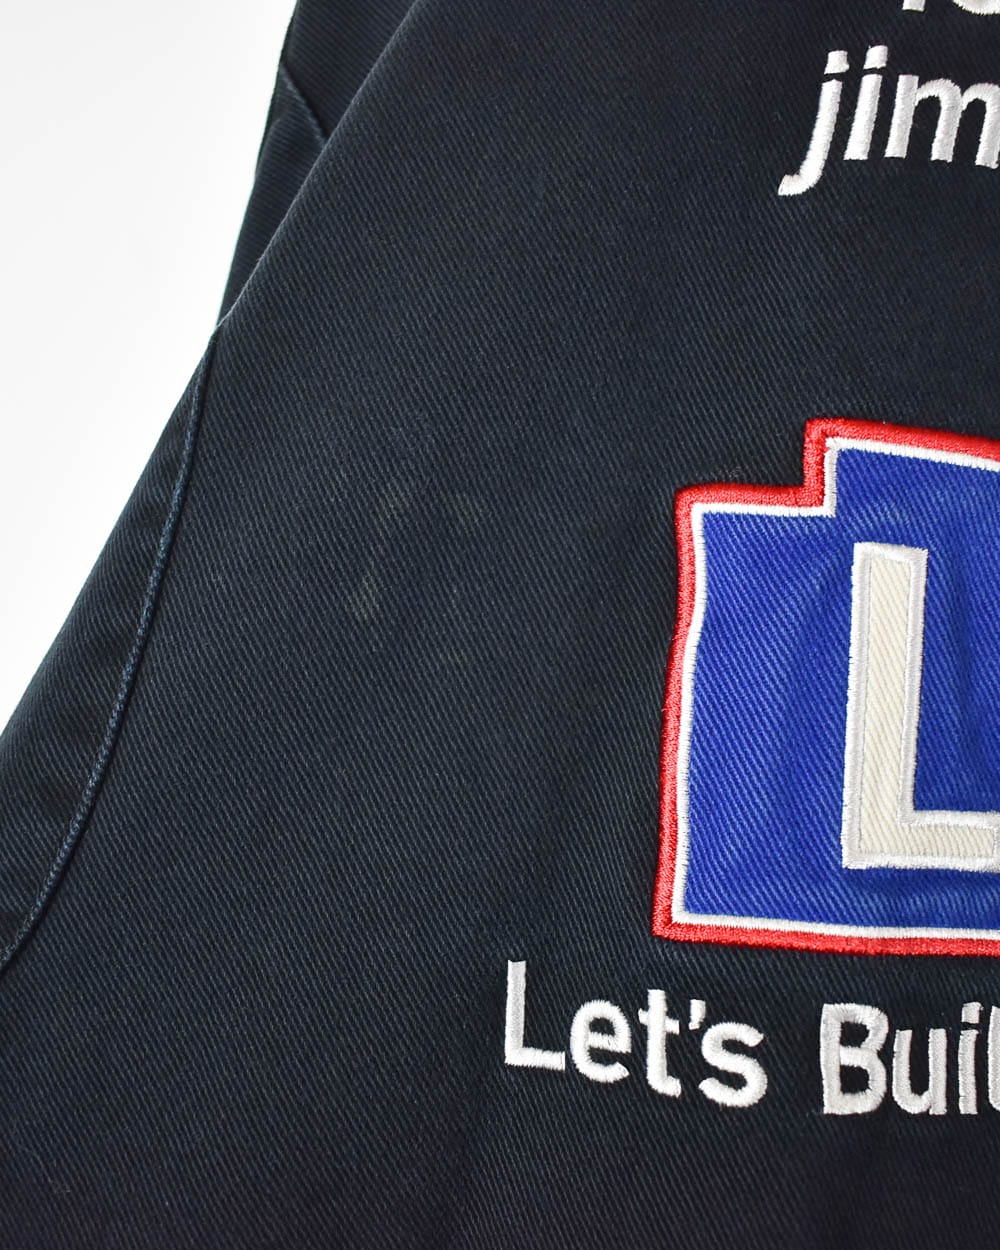 Black JH Design Lowe's Nascar Racing Jacket - XX-Large